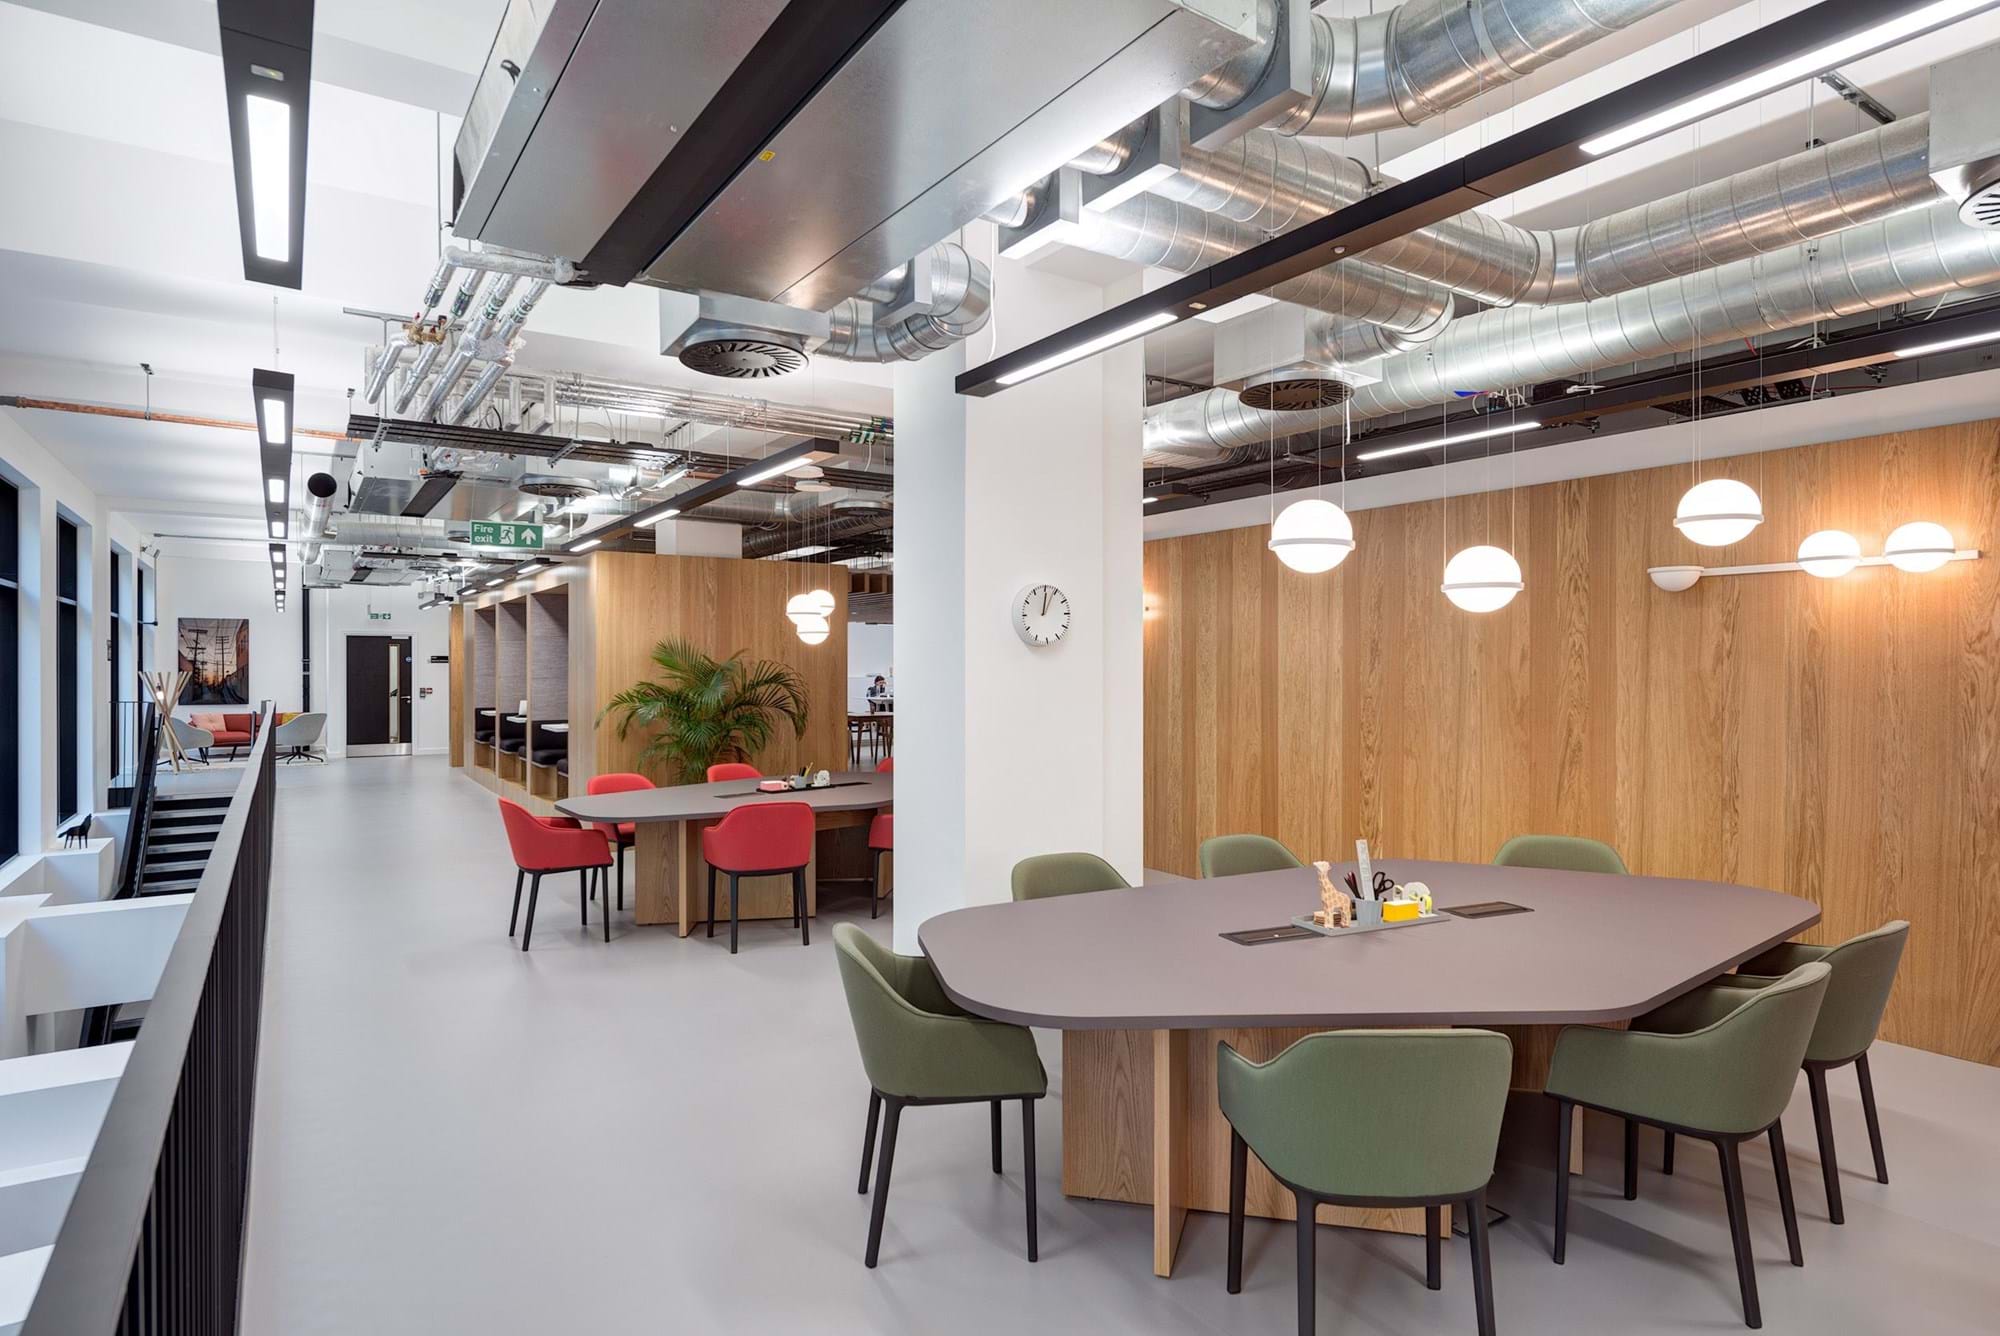 Modus Workspace office design, fit out and refurbishment - Regus spaces Epworth - Spaces Epworth 16 highres sRGB.jpg